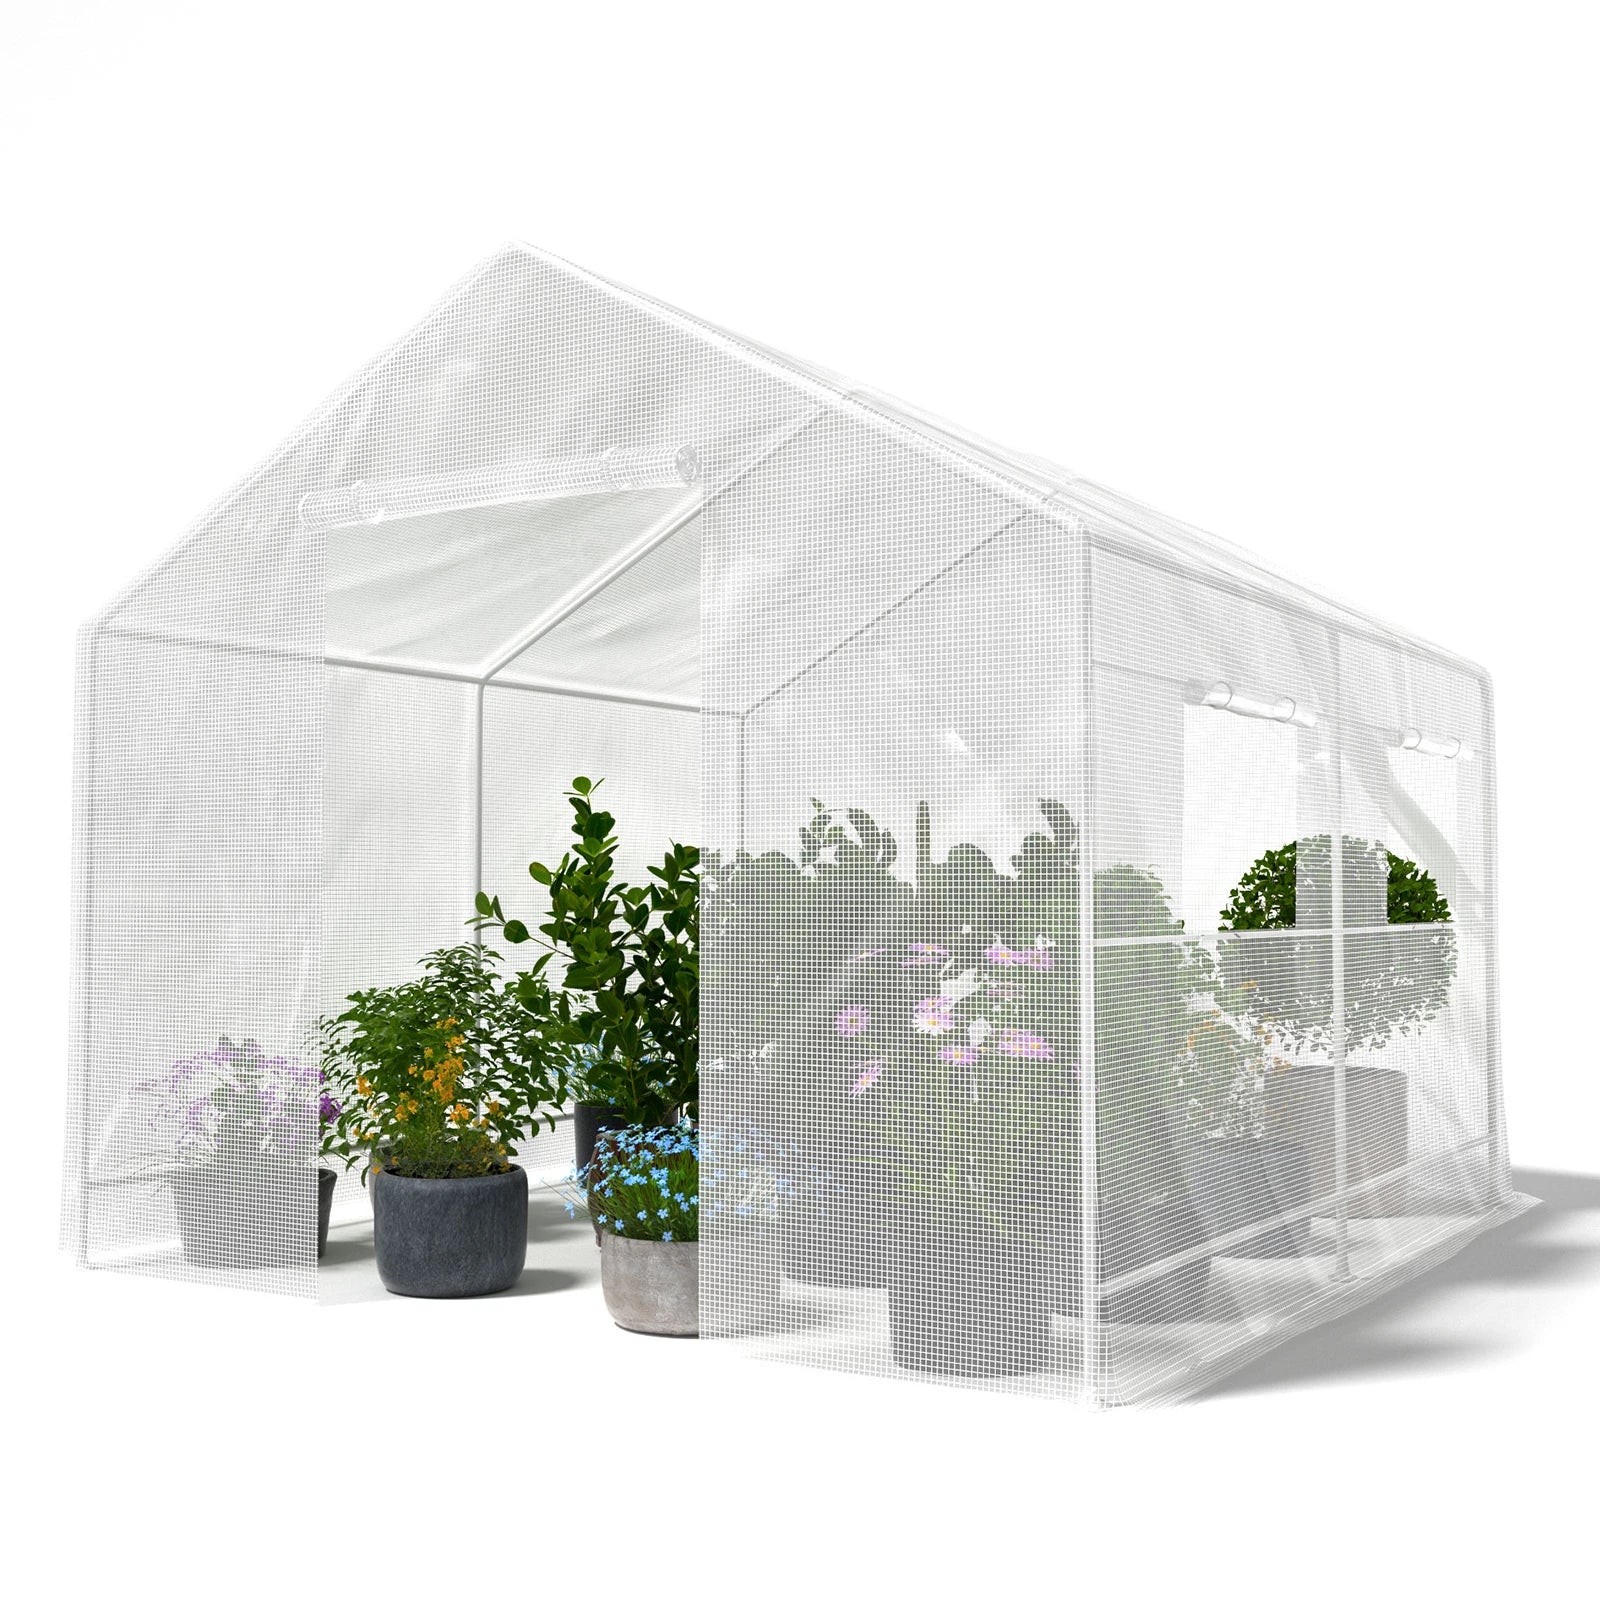 FUNG YARD 9.2' × 10.2' Outdoor Walk-in Greenhouse With Screen Windows